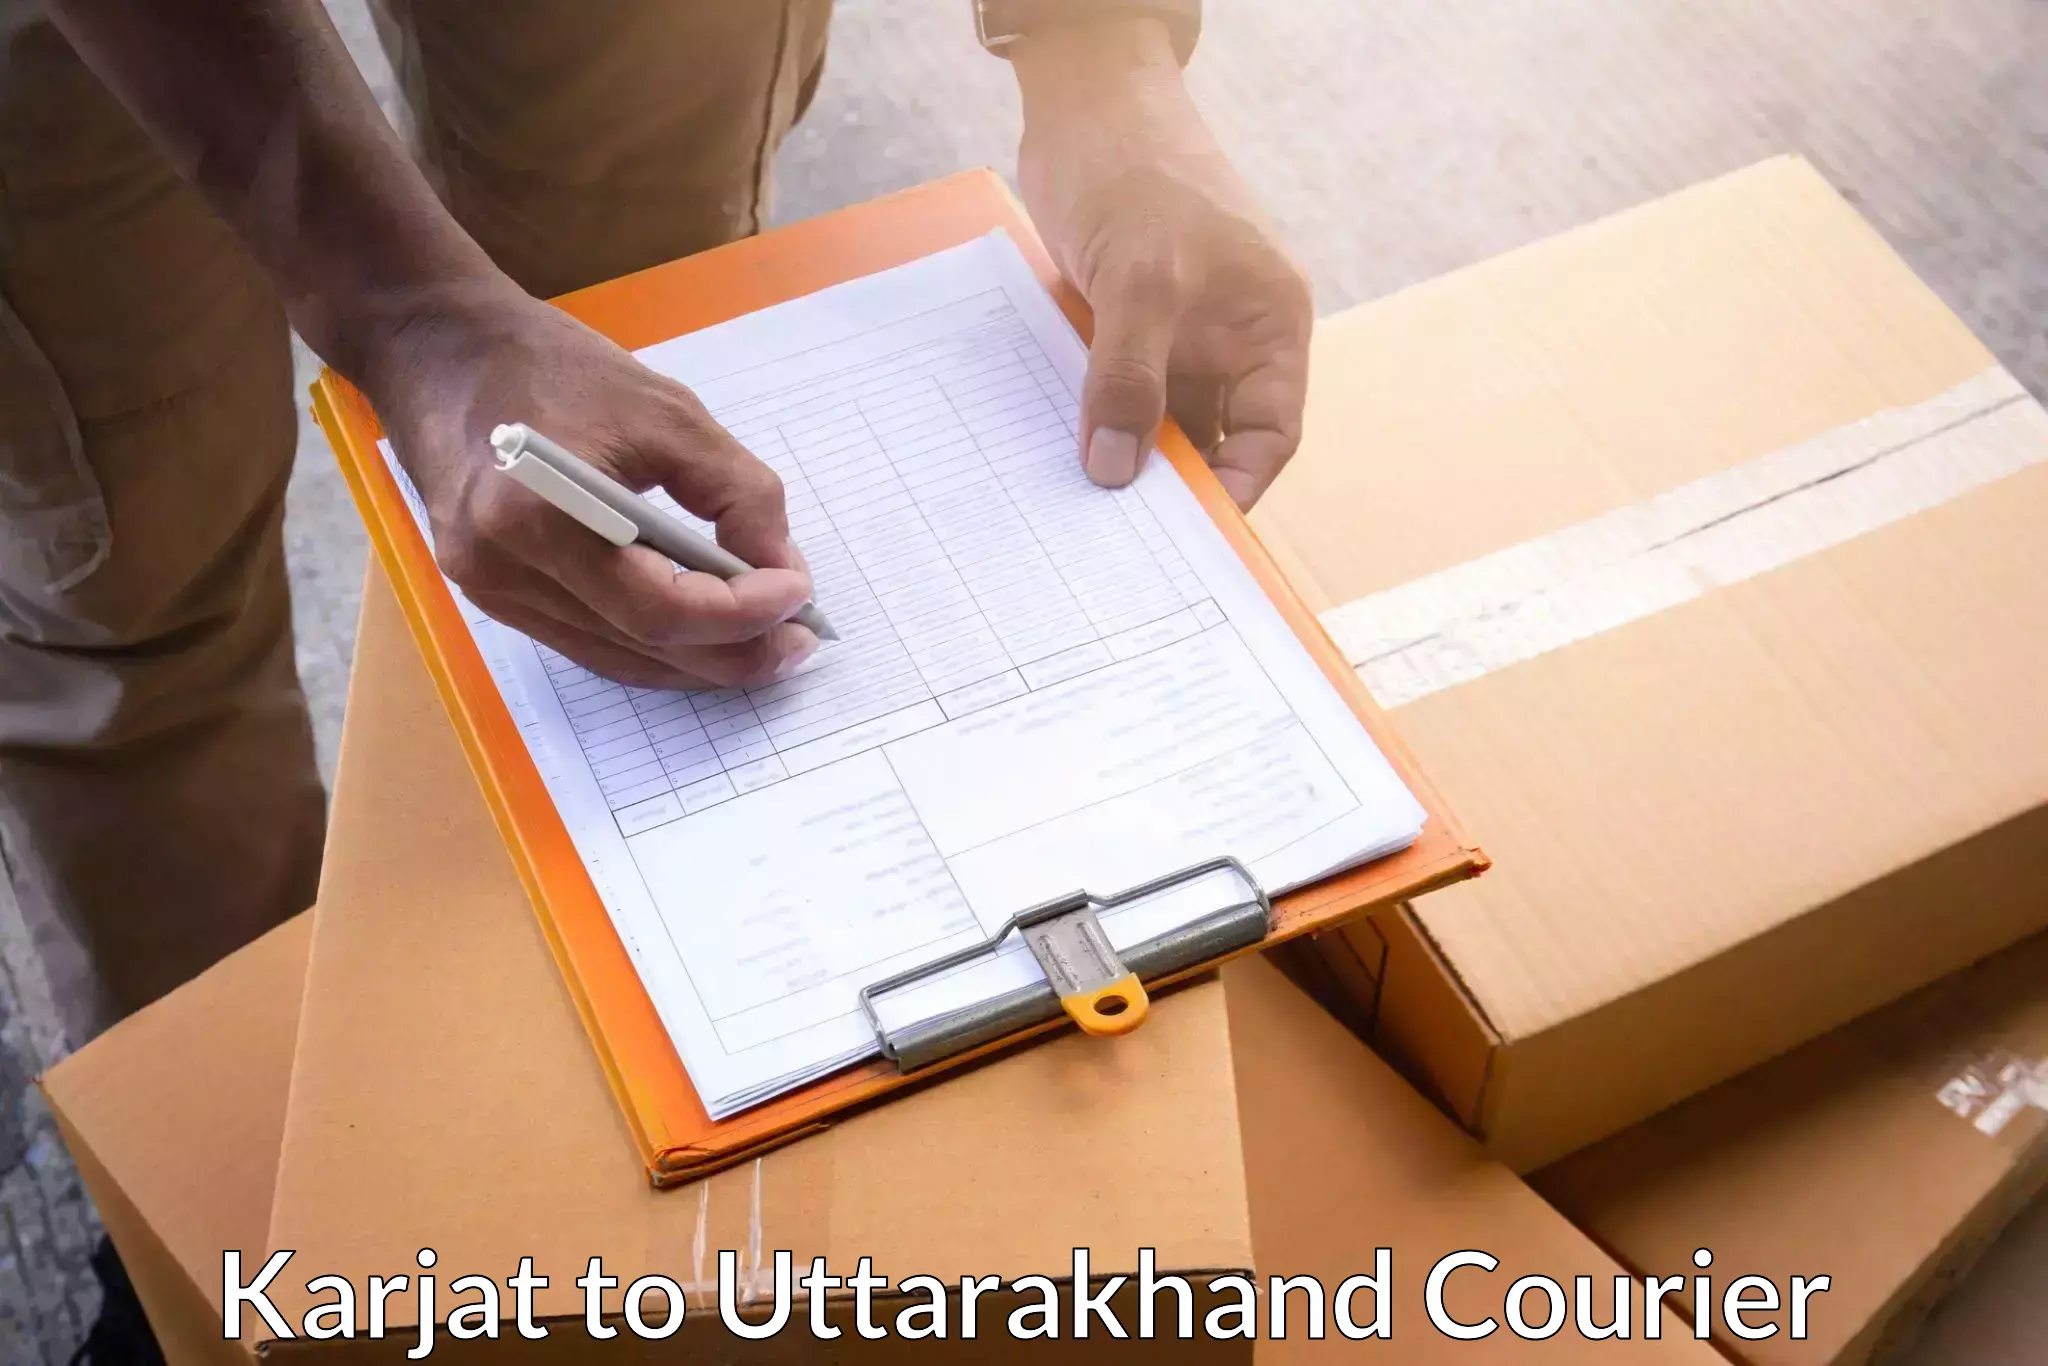 Sustainable delivery practices Karjat to IIT Roorkee